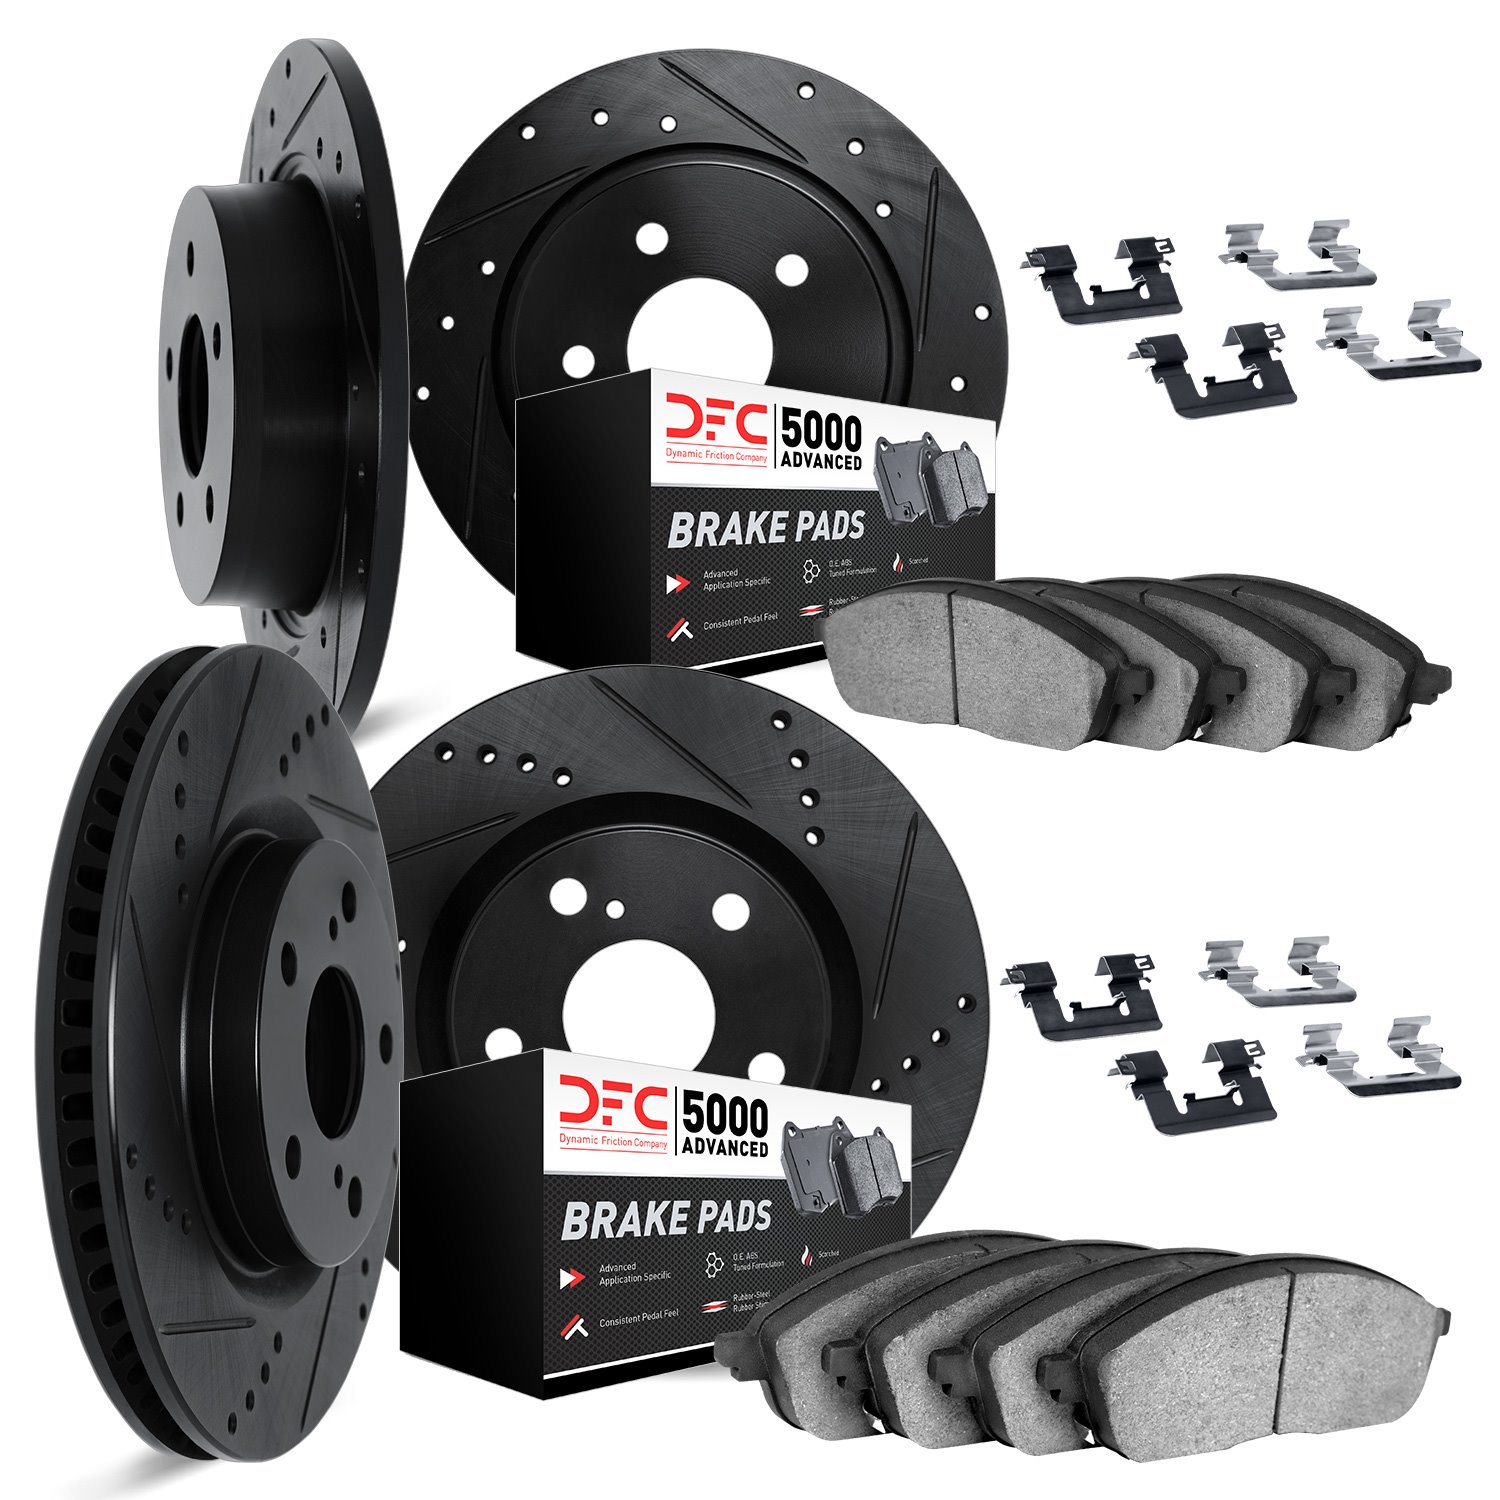 8514-54085 Drilled/Slotted Brake Rotors w/5000 Advanced Brake Pads Kit & Hardware [Black], 2011-2015 Ford/Lincoln/Mercury/Mazda,